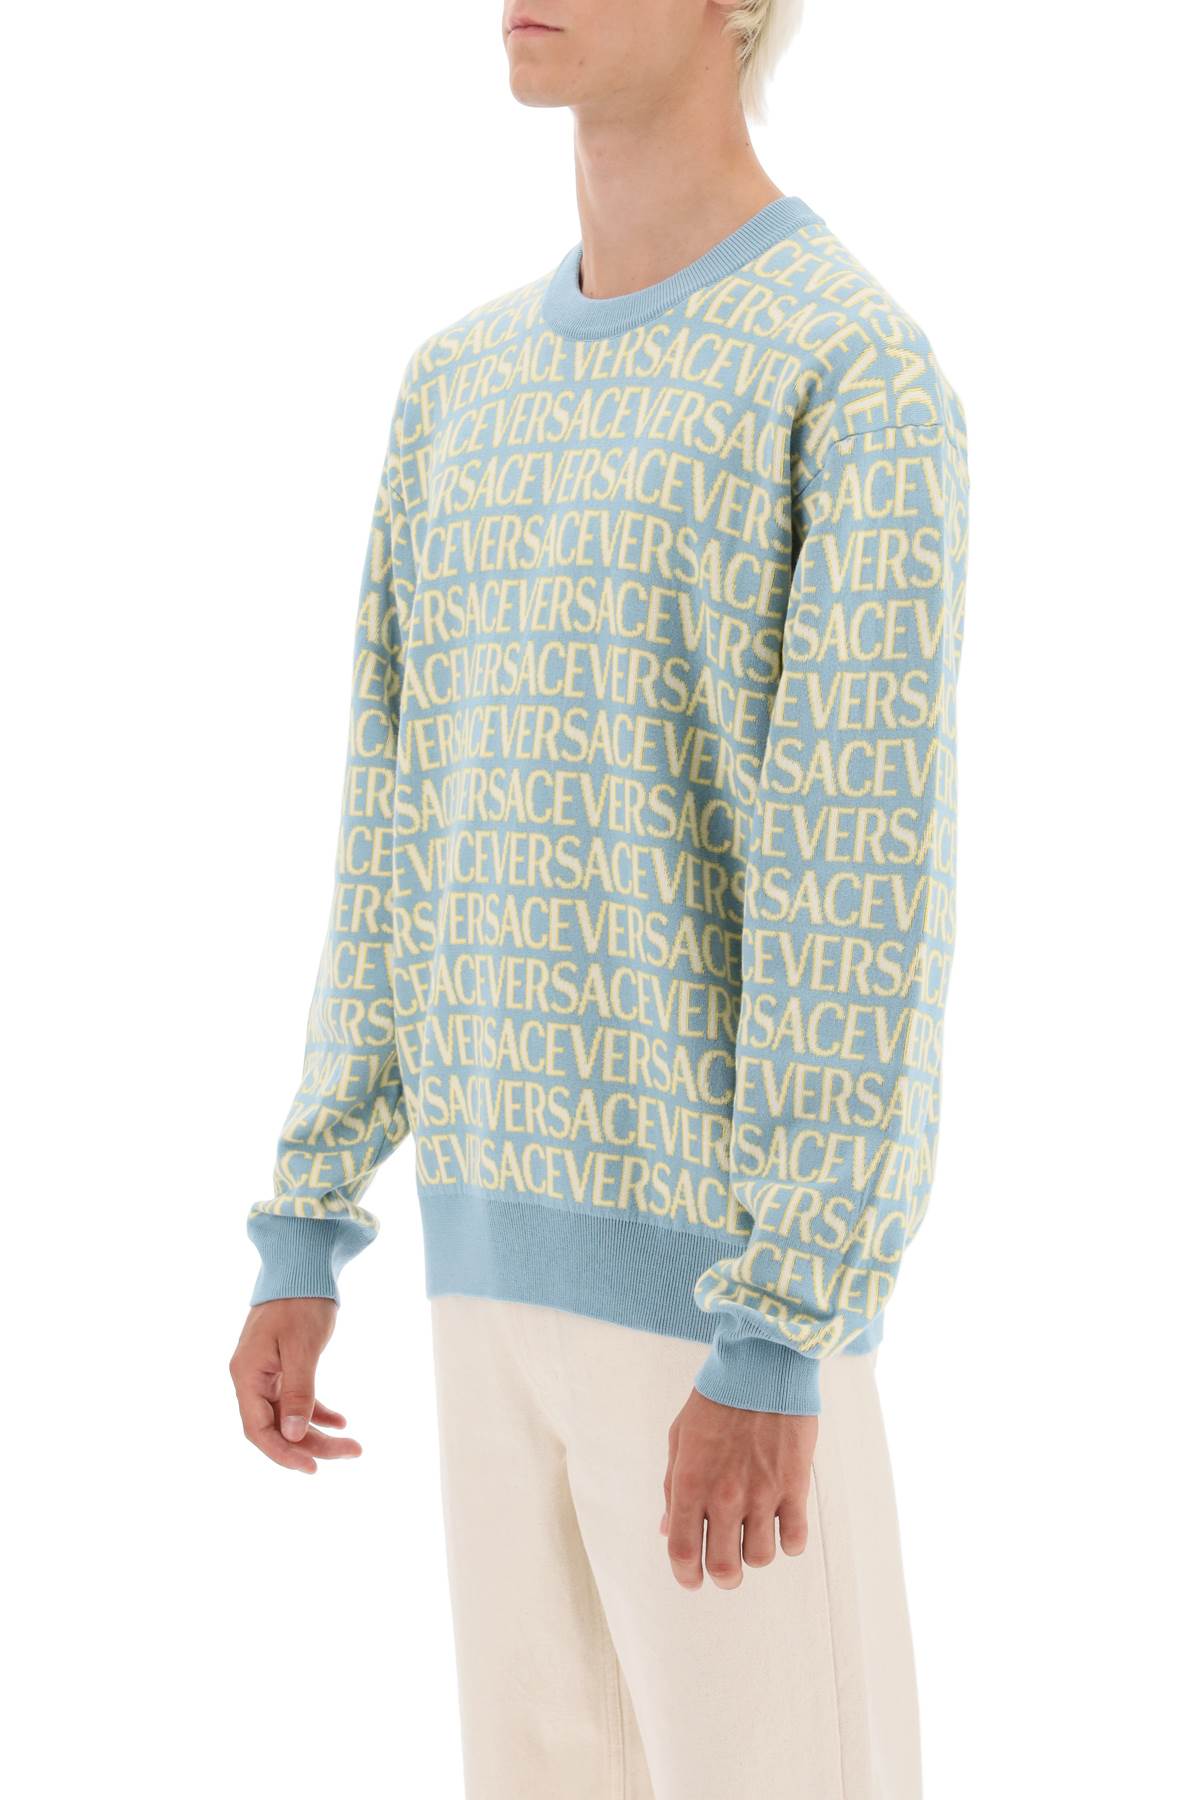 Versace Versace monogram cotton sweater